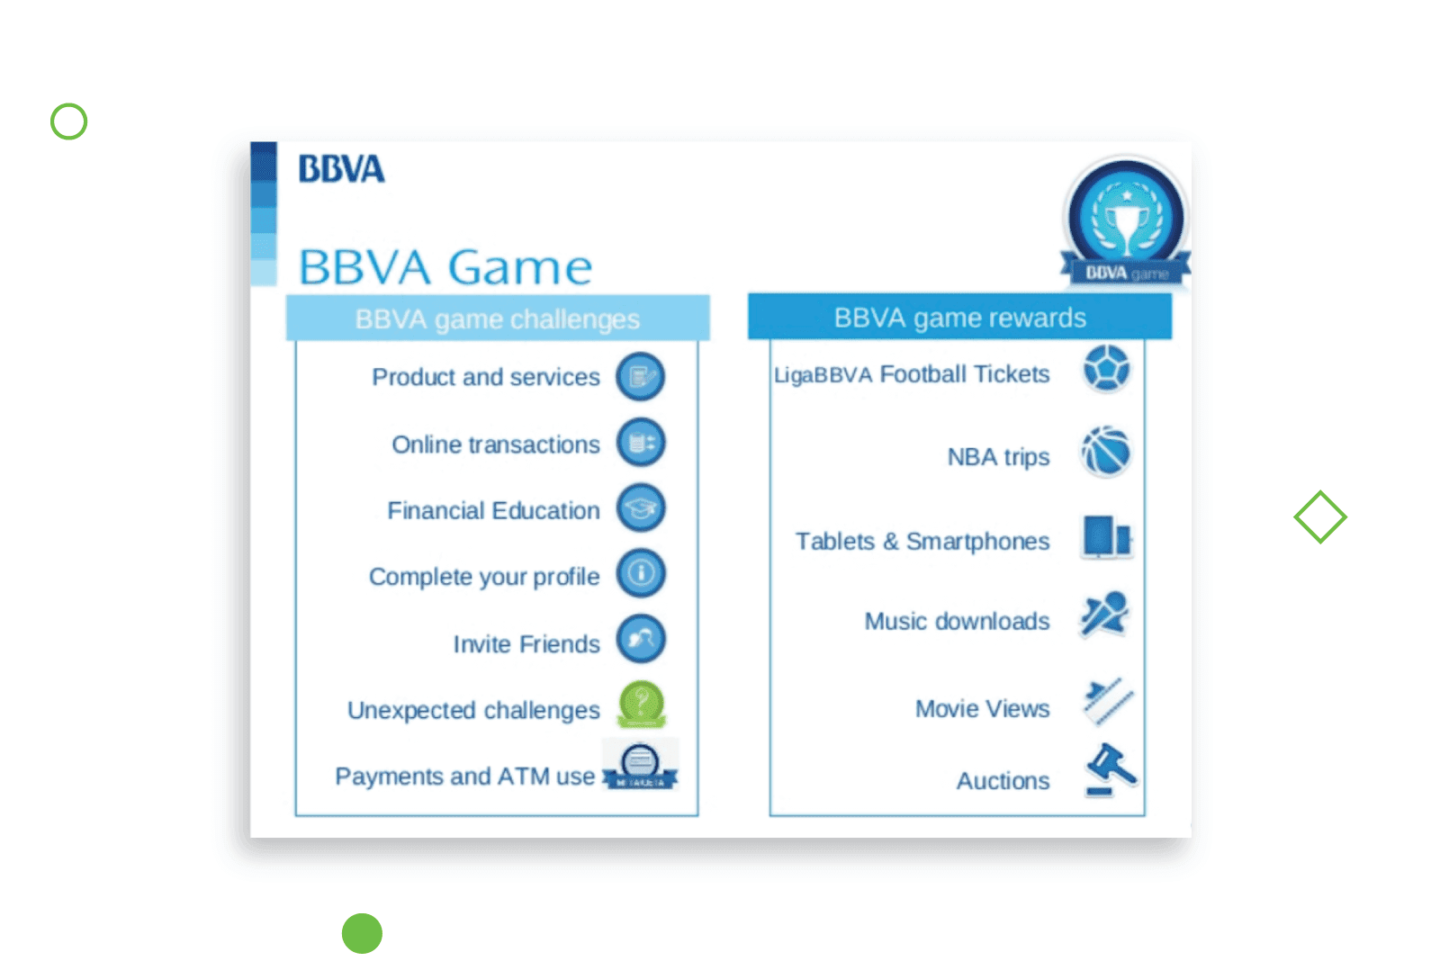 BBVA gamification image